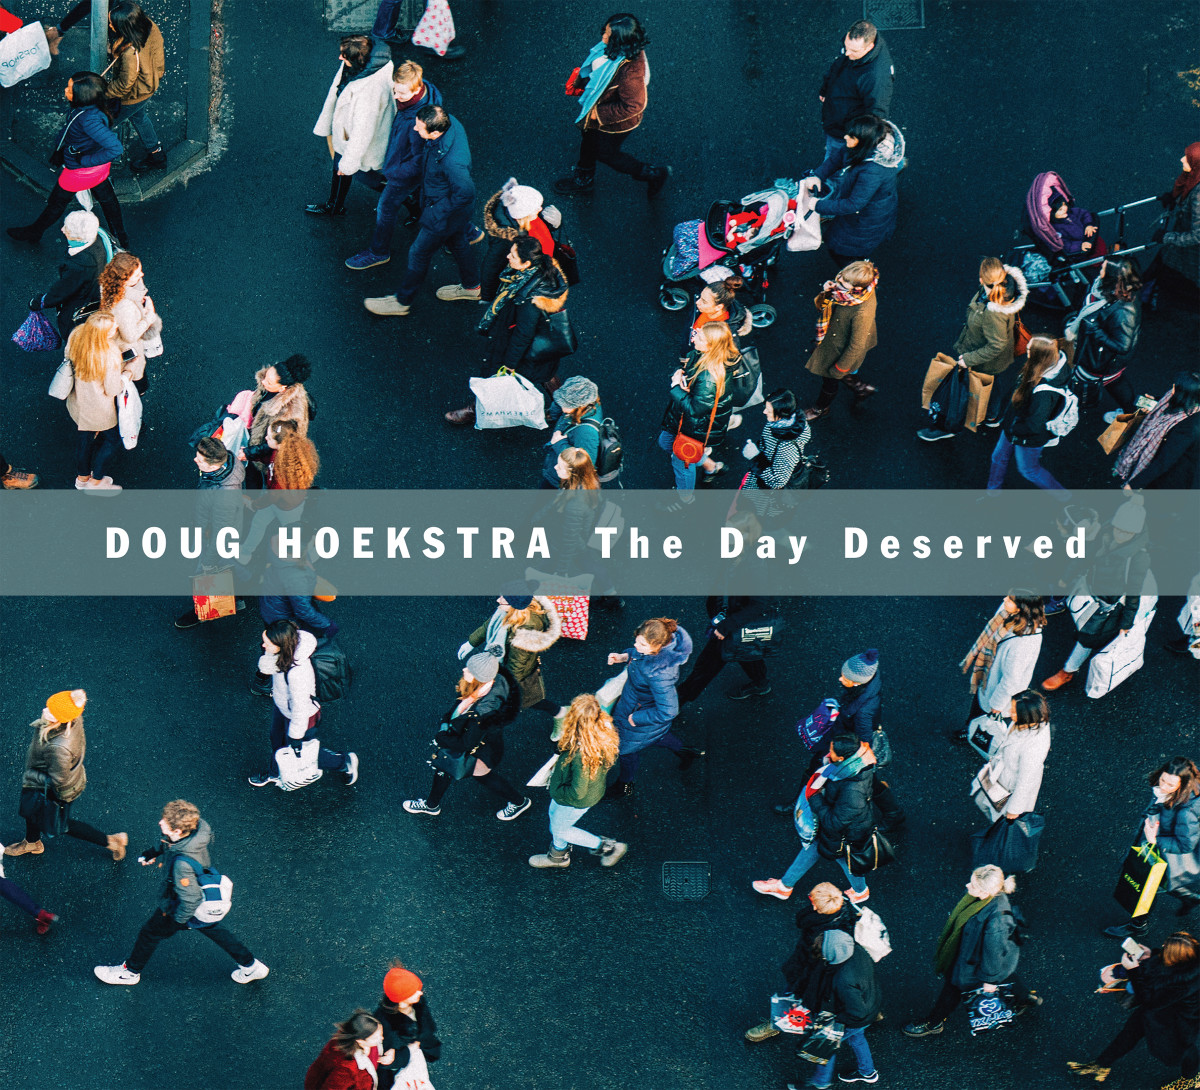 hoekstra-the-day-deserved-cover